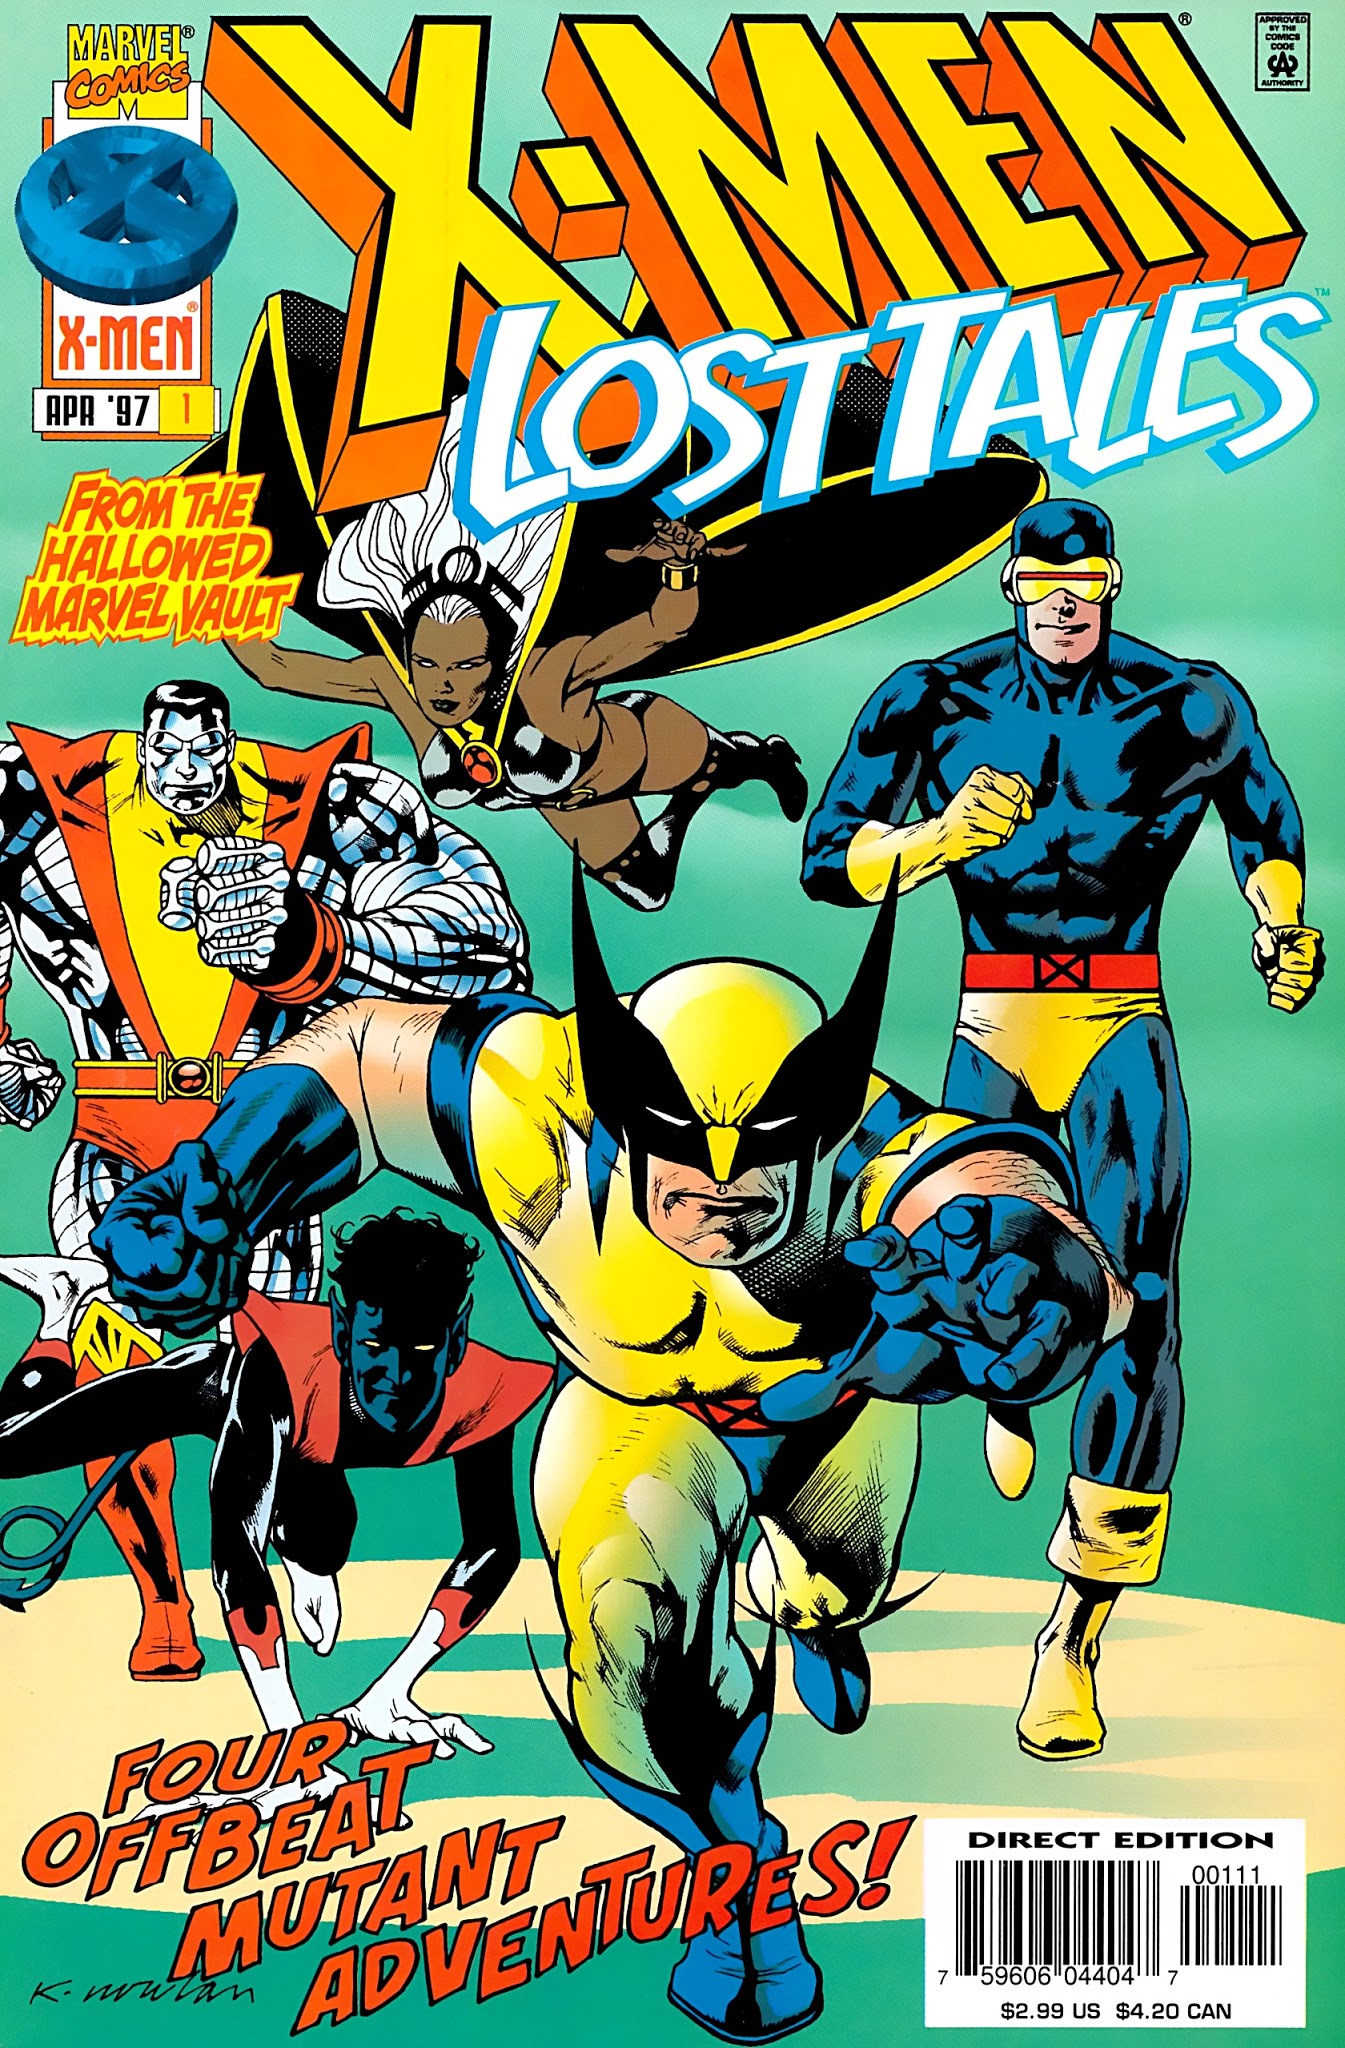 Read online X-Men: Lost Tales comic -  Issue #1 - 1